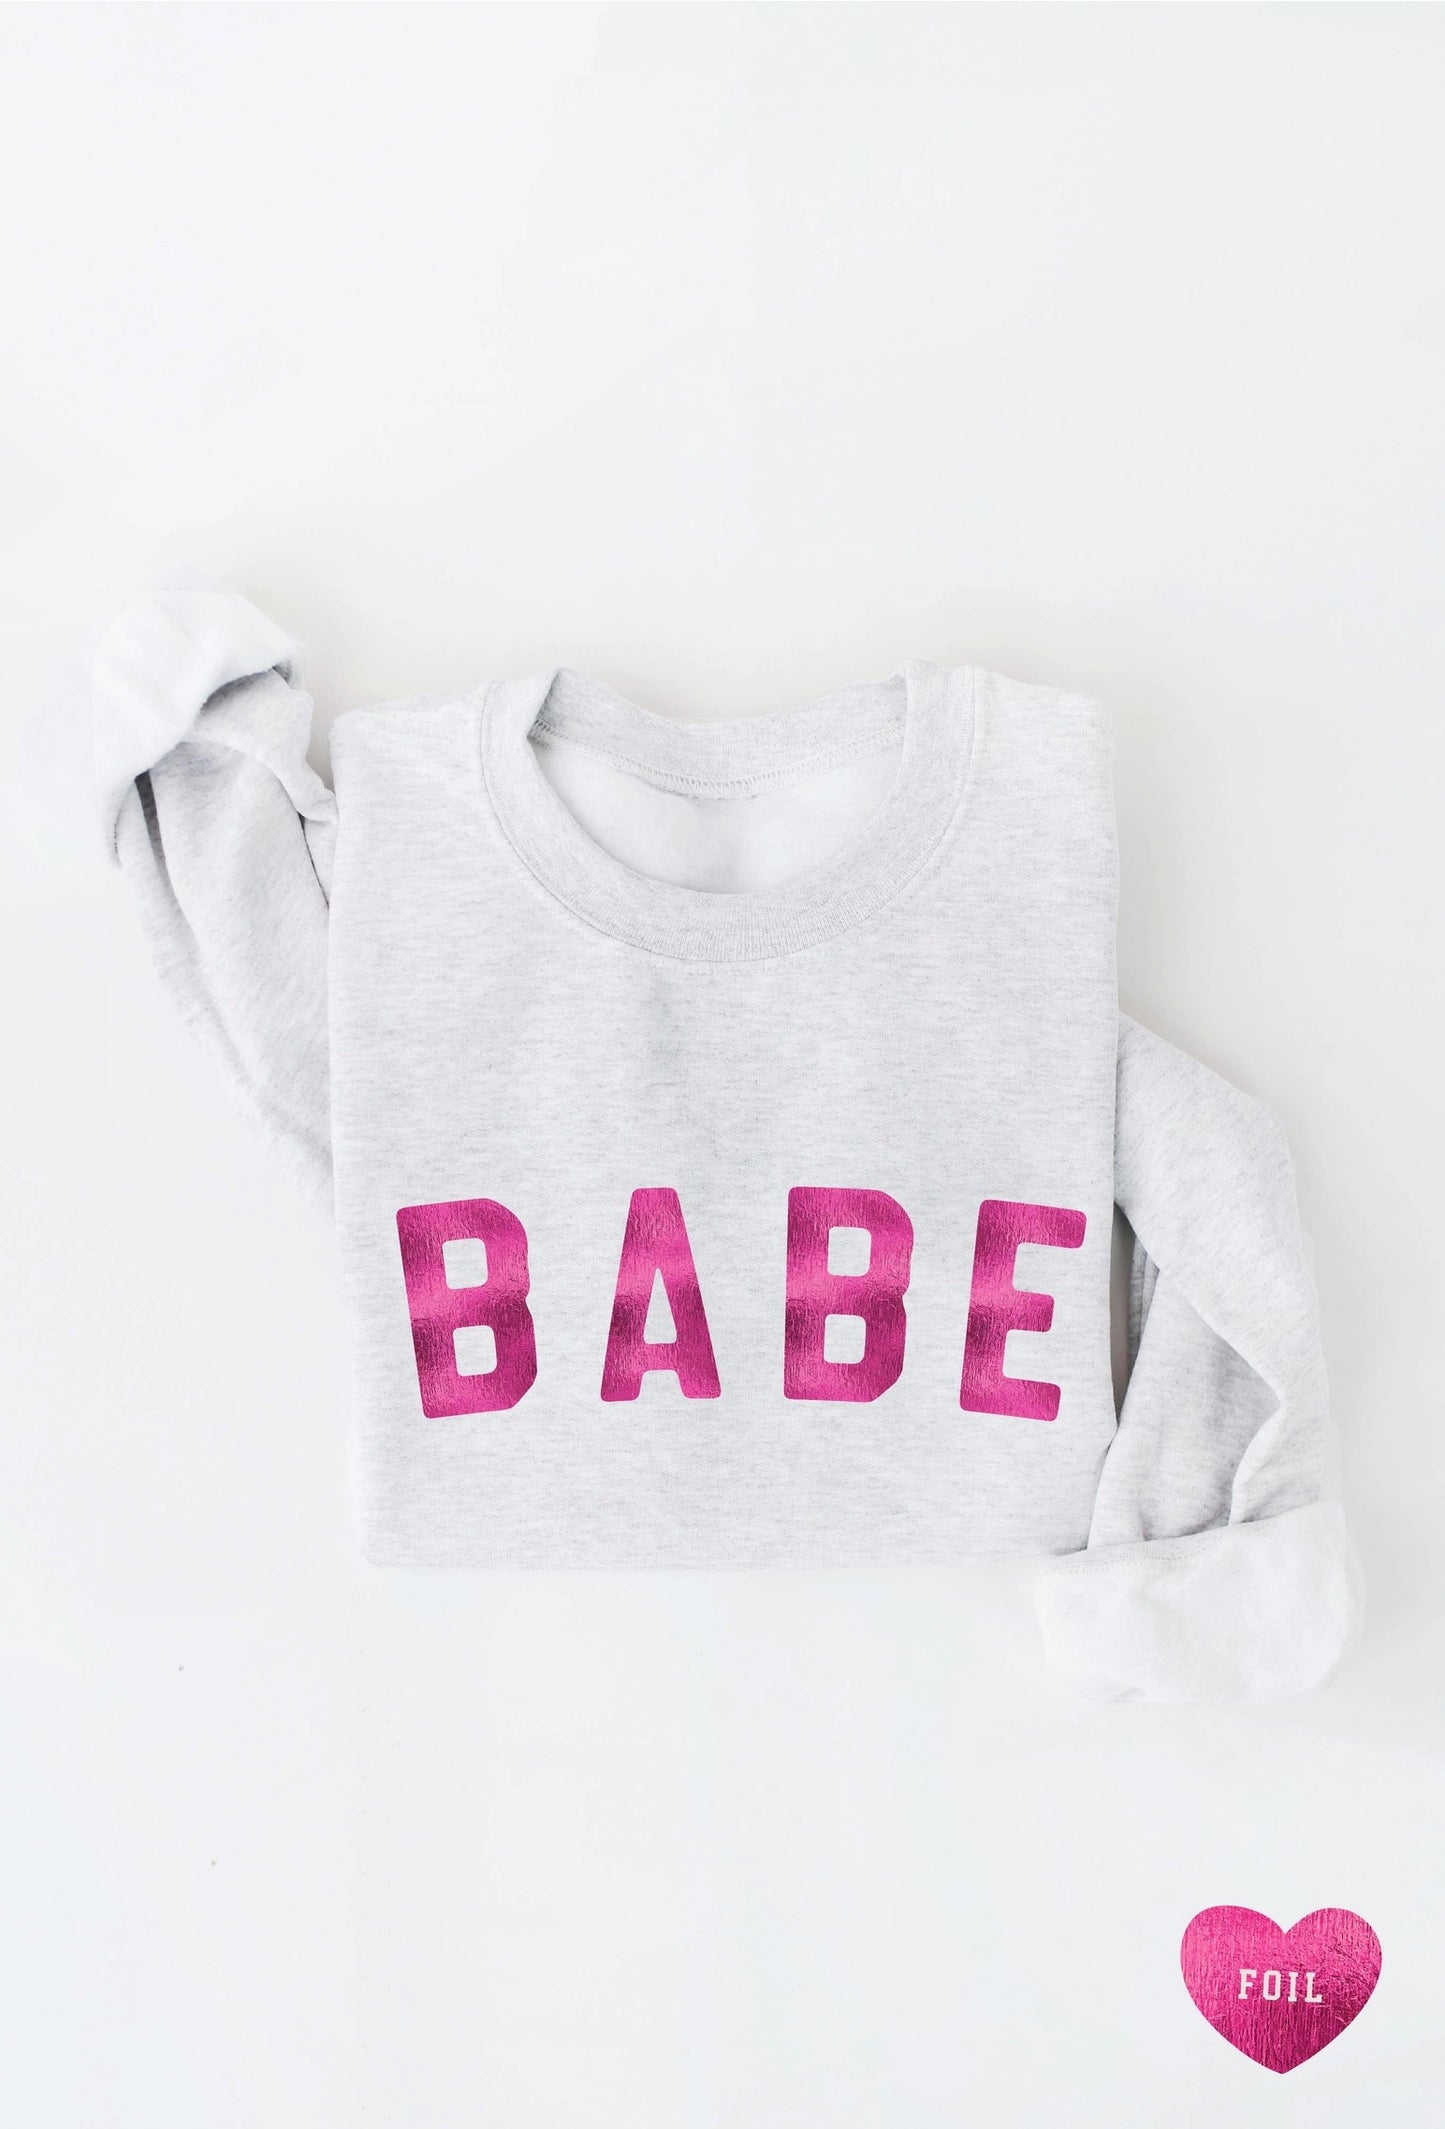 BABE Foil Graphic Sweatshirt